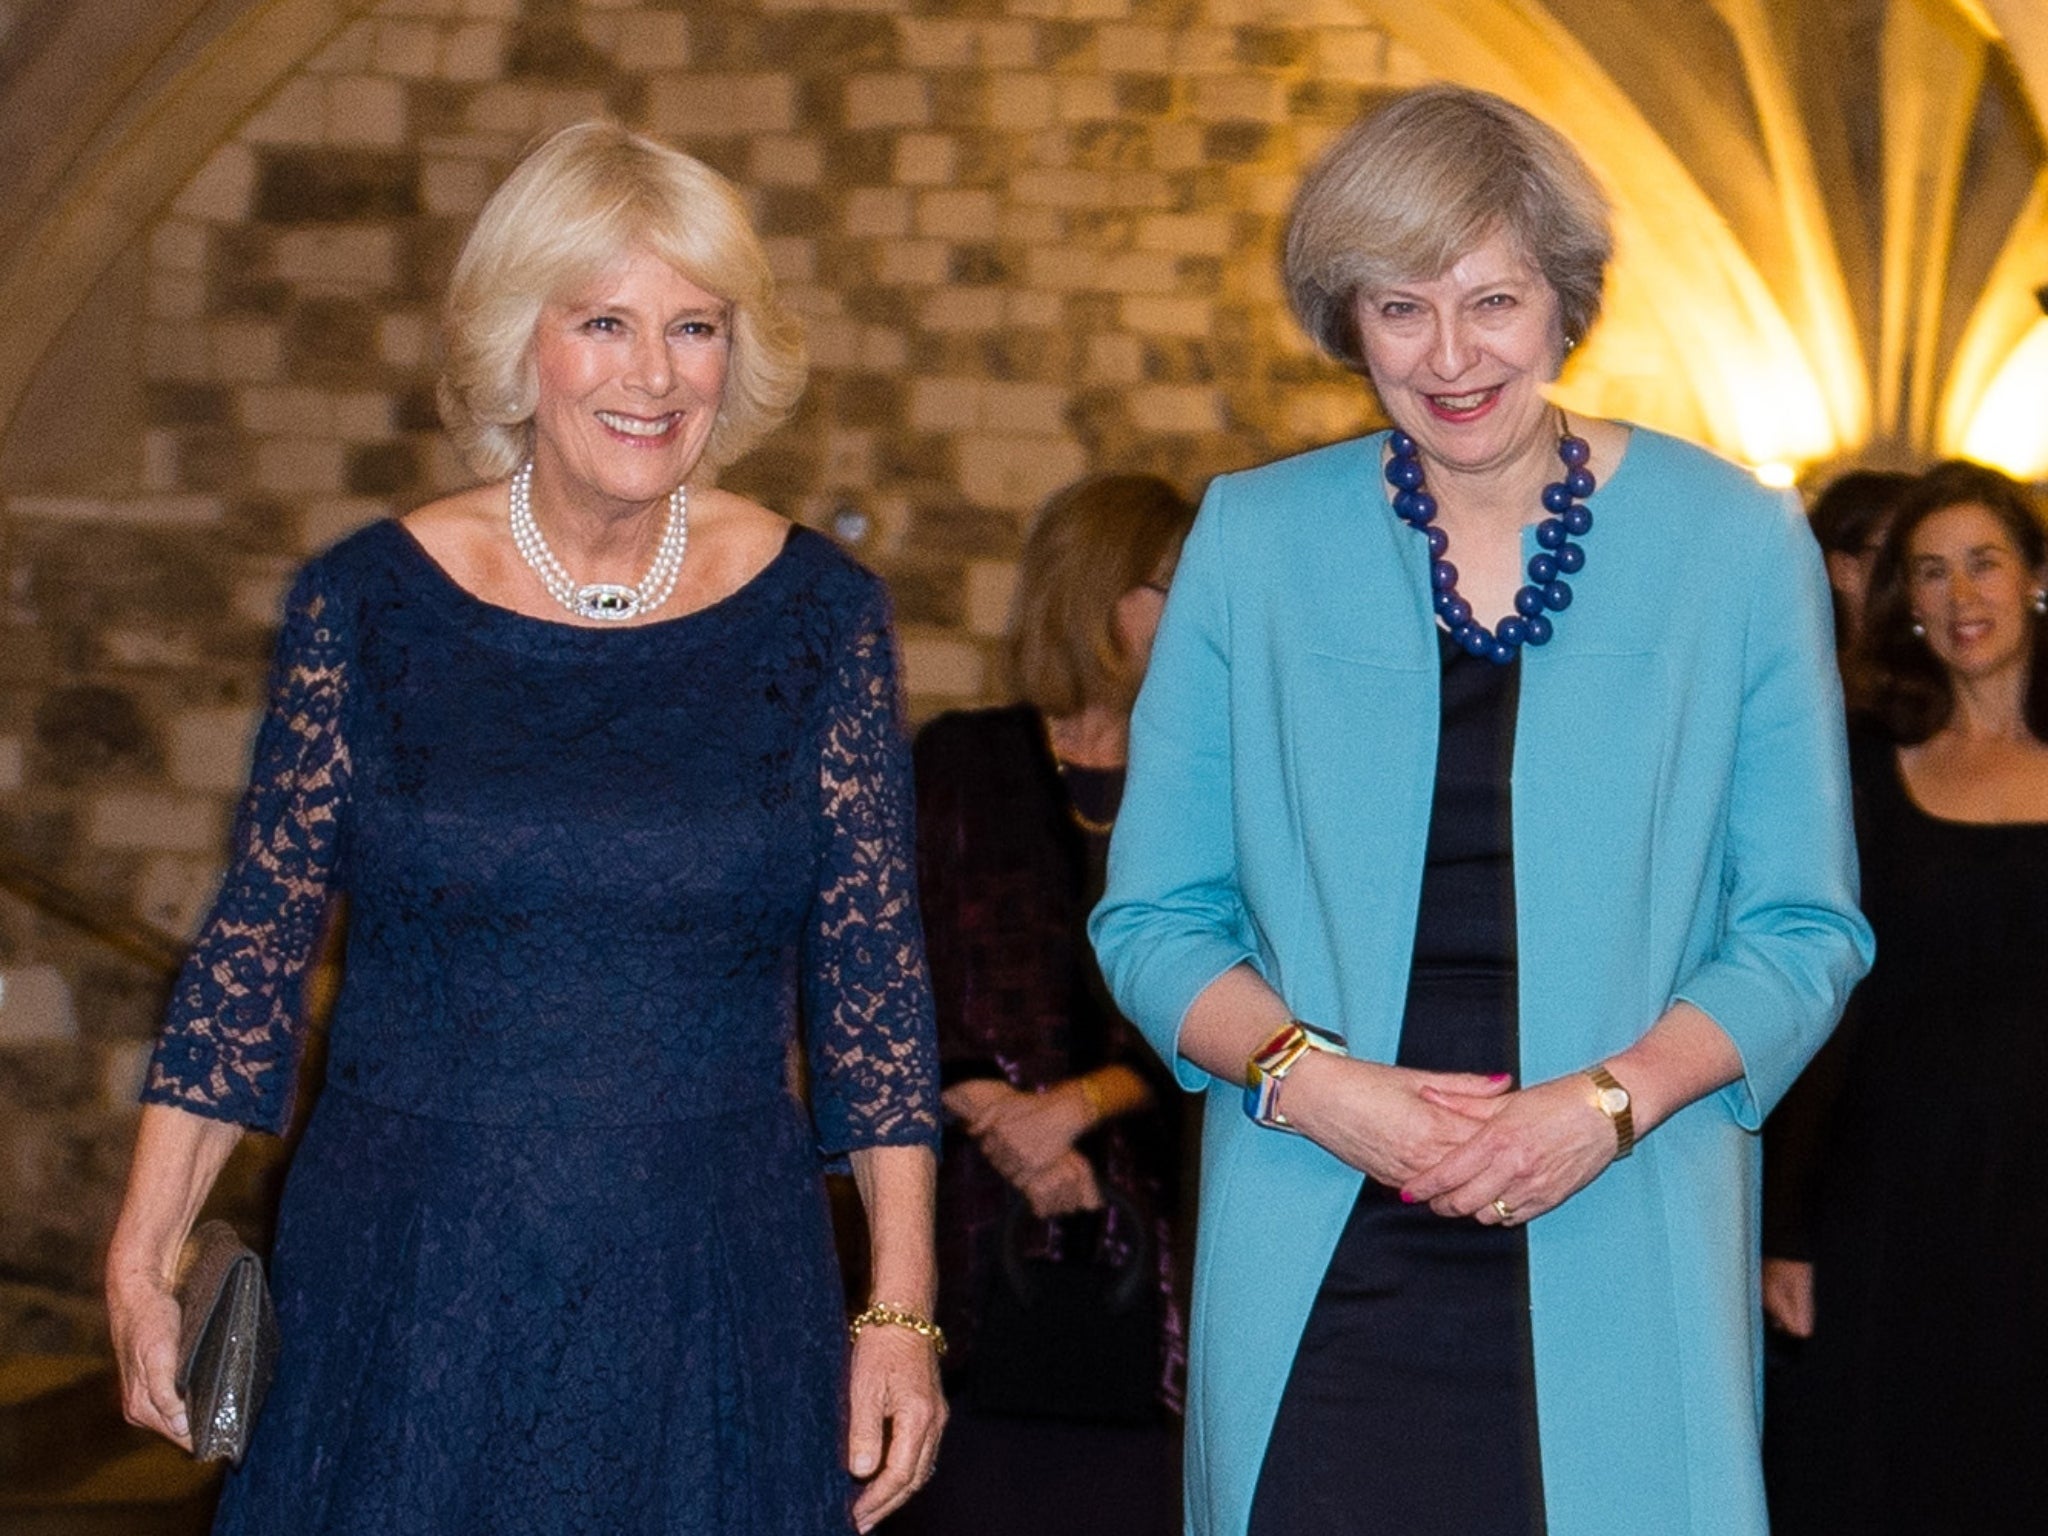 The Duchess of Cornwall and Theresa May